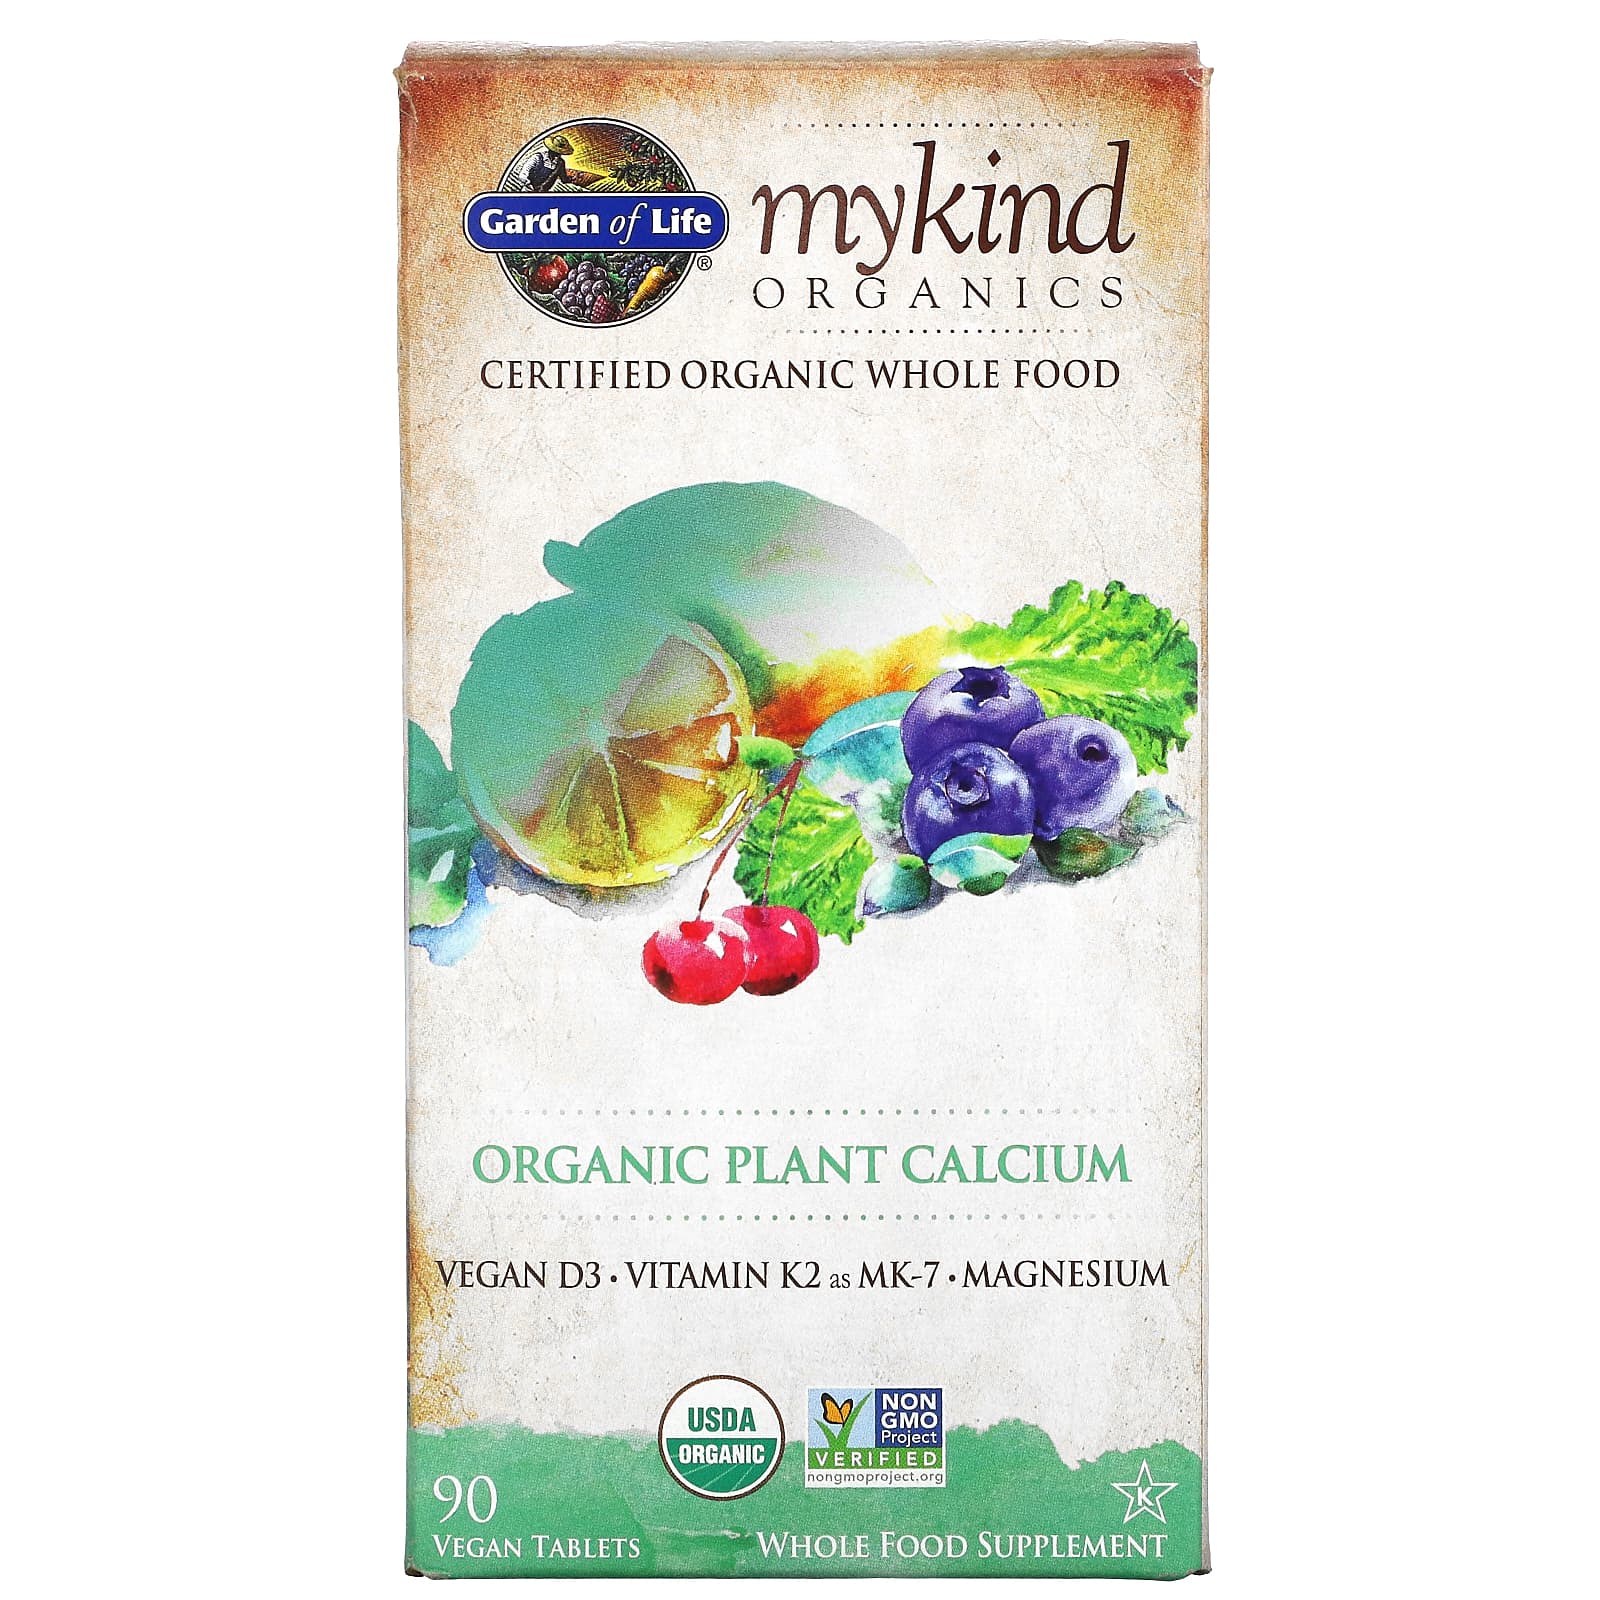 Garden of Life Kind Organics Organic Plant Calcium, 90 Vegan Tablets